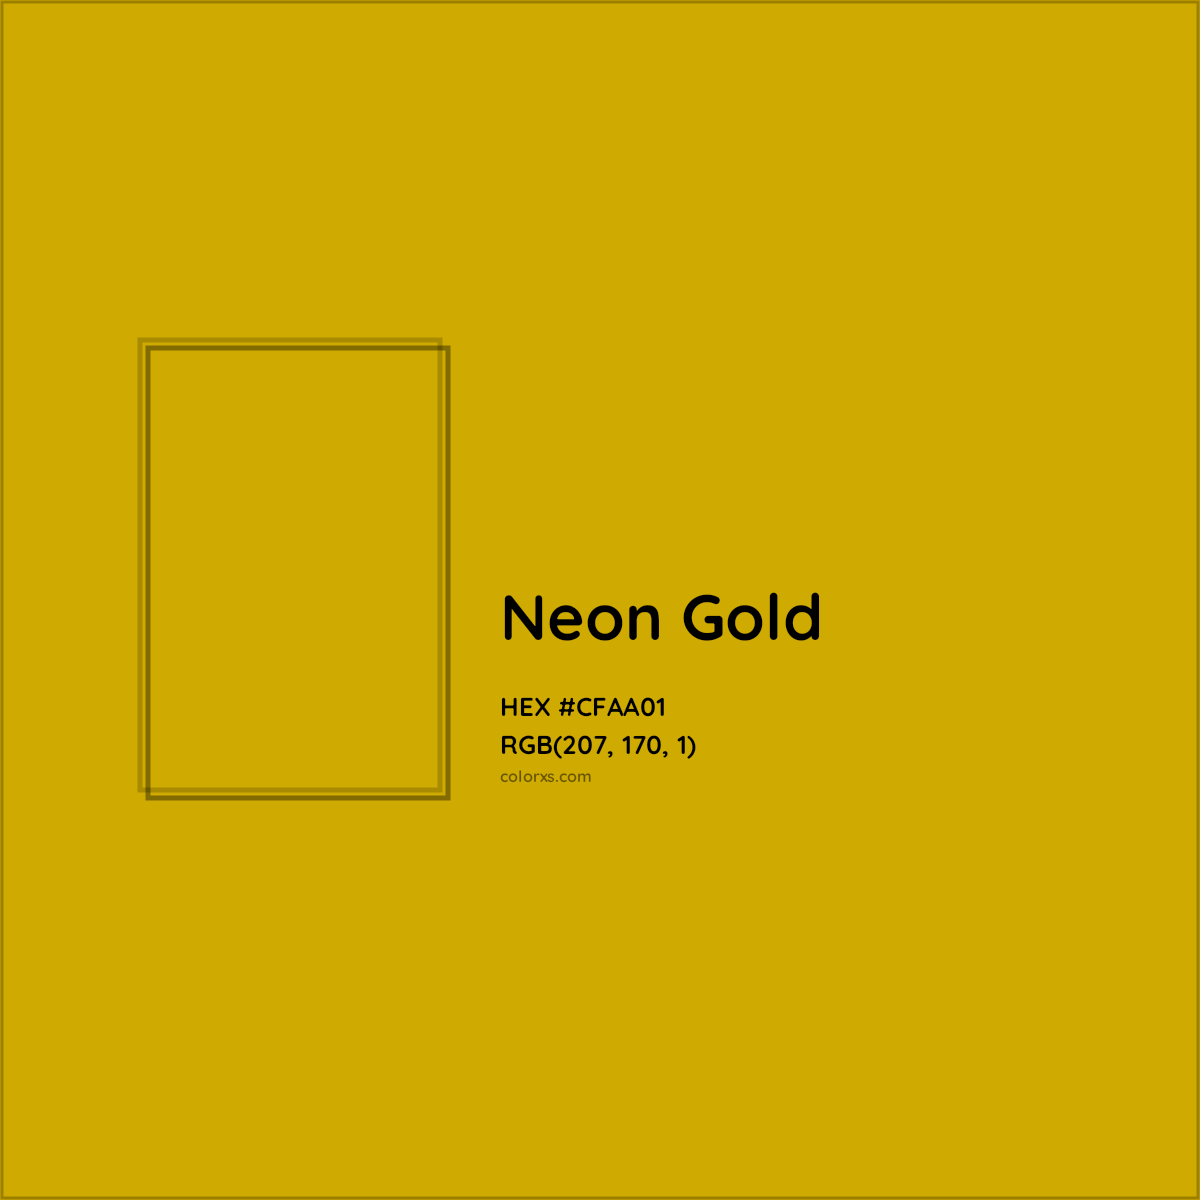 HEX #CFAA01 Neon Gold Color - Color Code